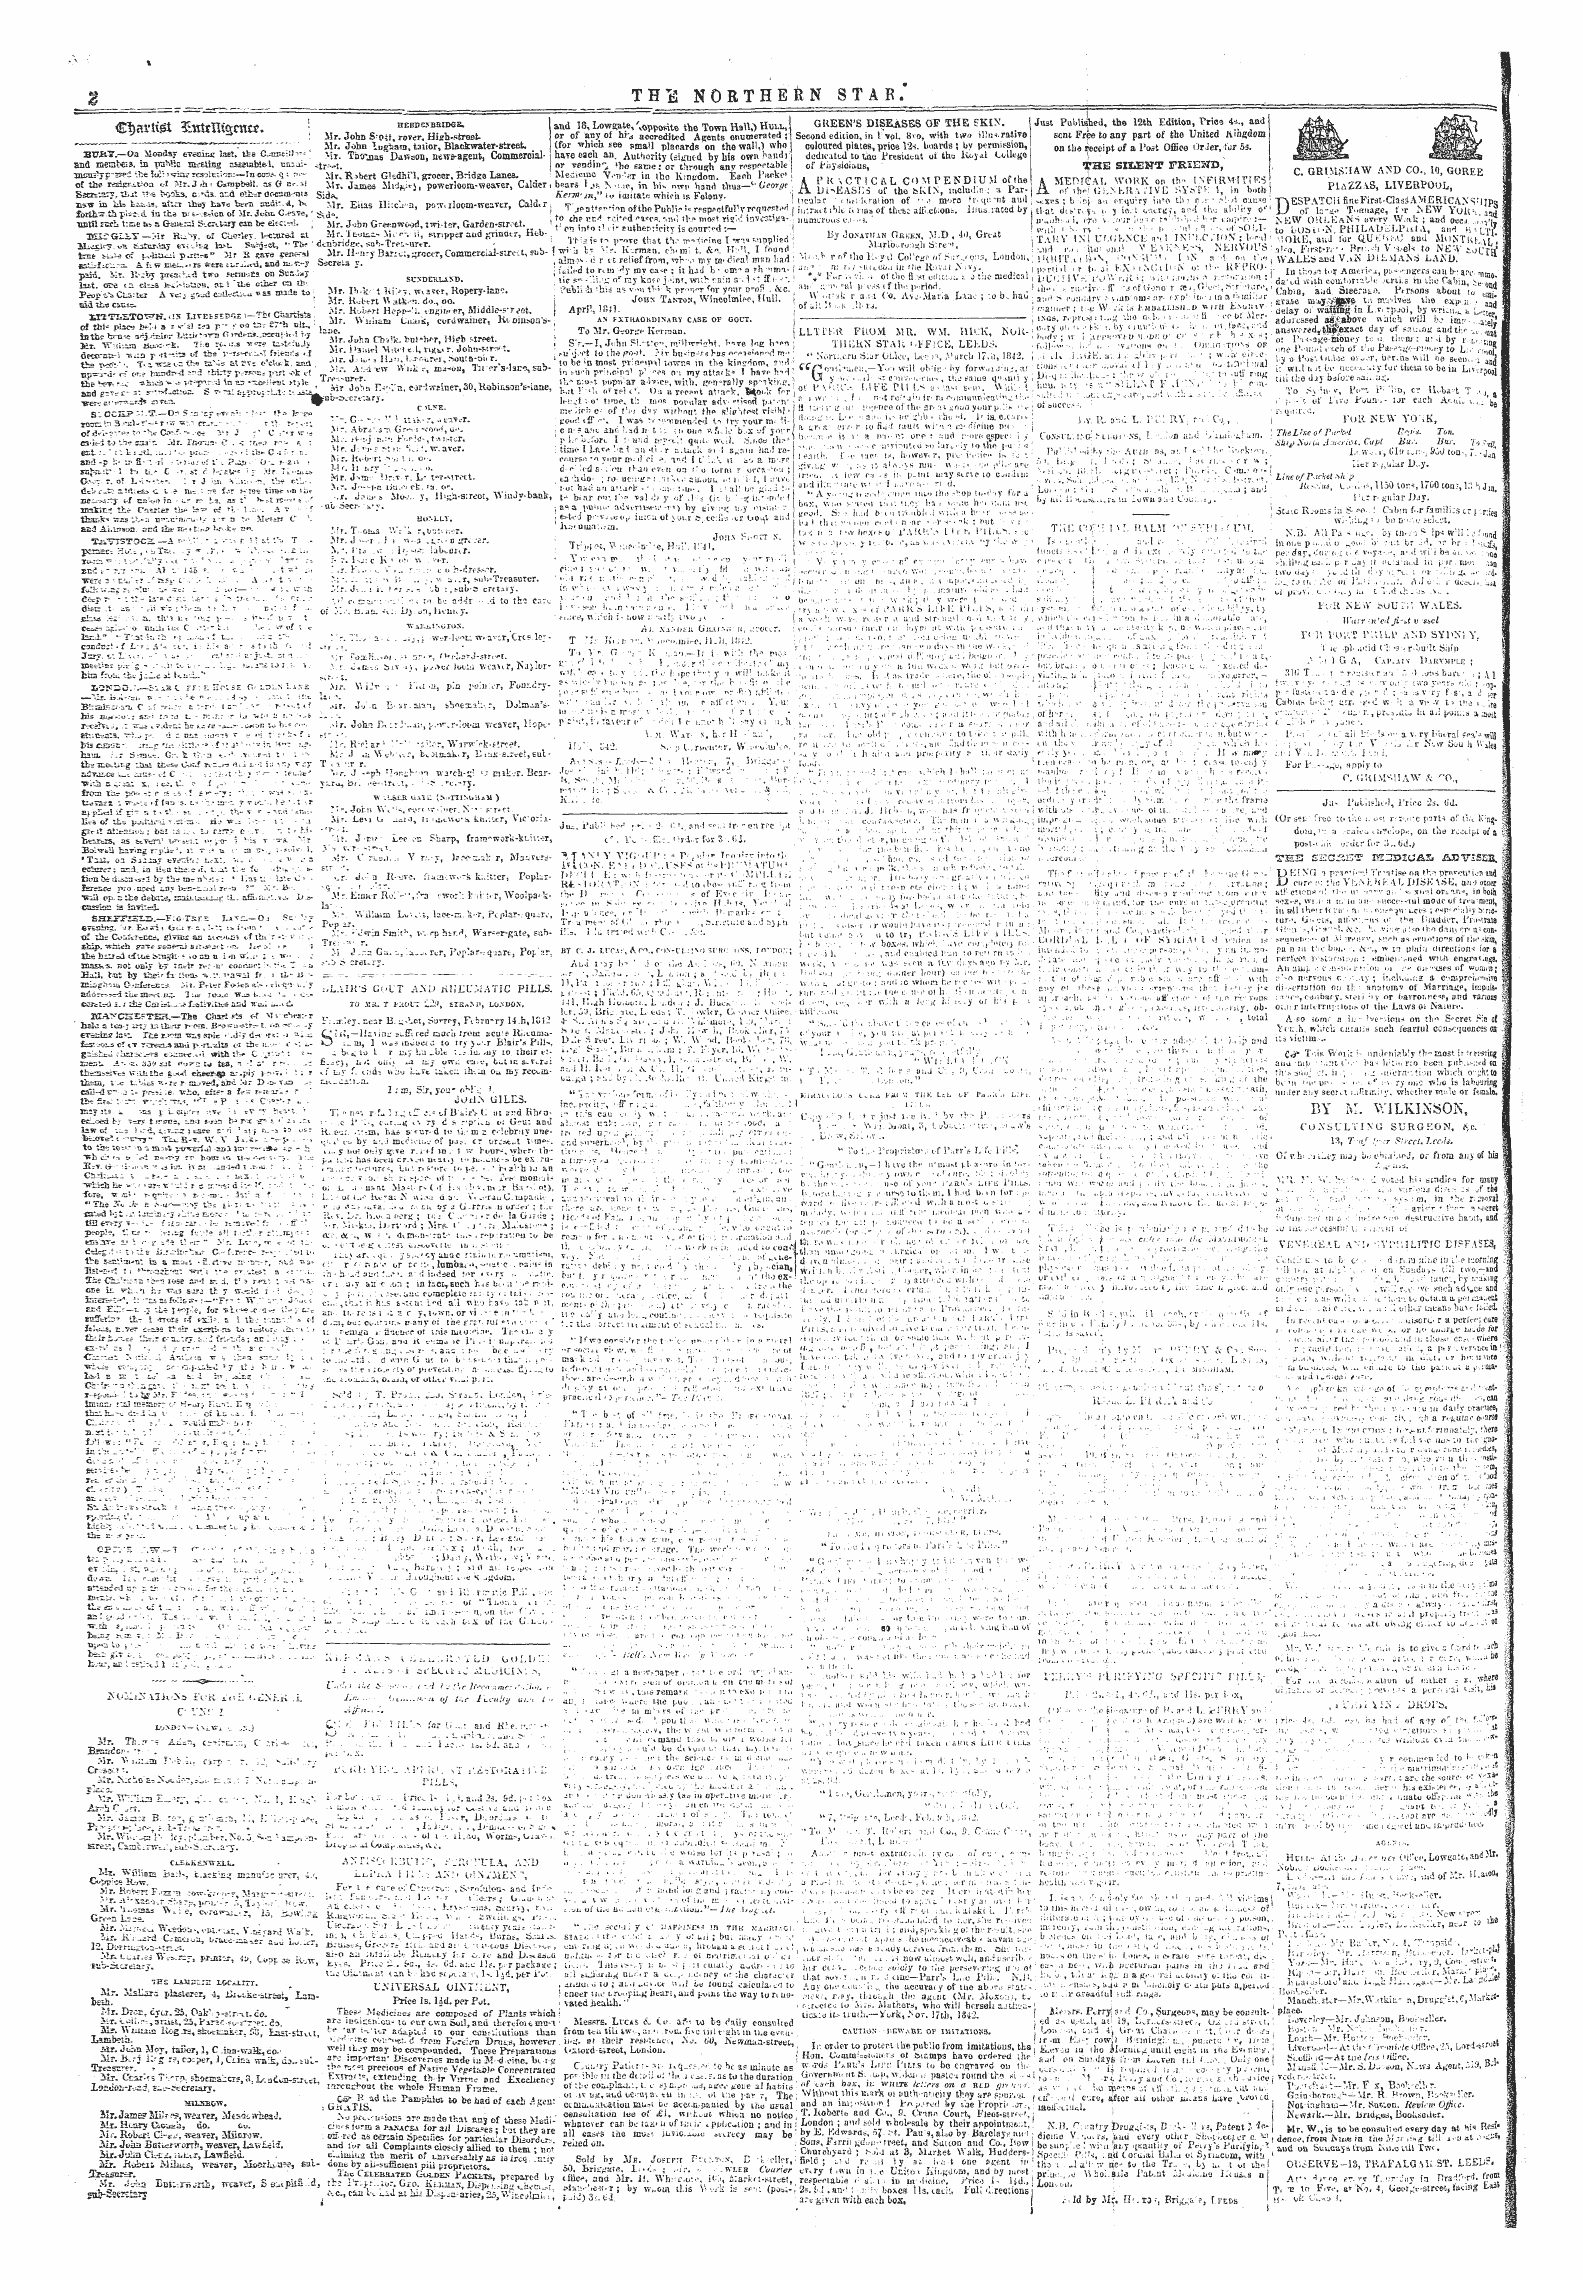 Northern Star (1837-1852): jS F Y, 5th edition - Ad00215